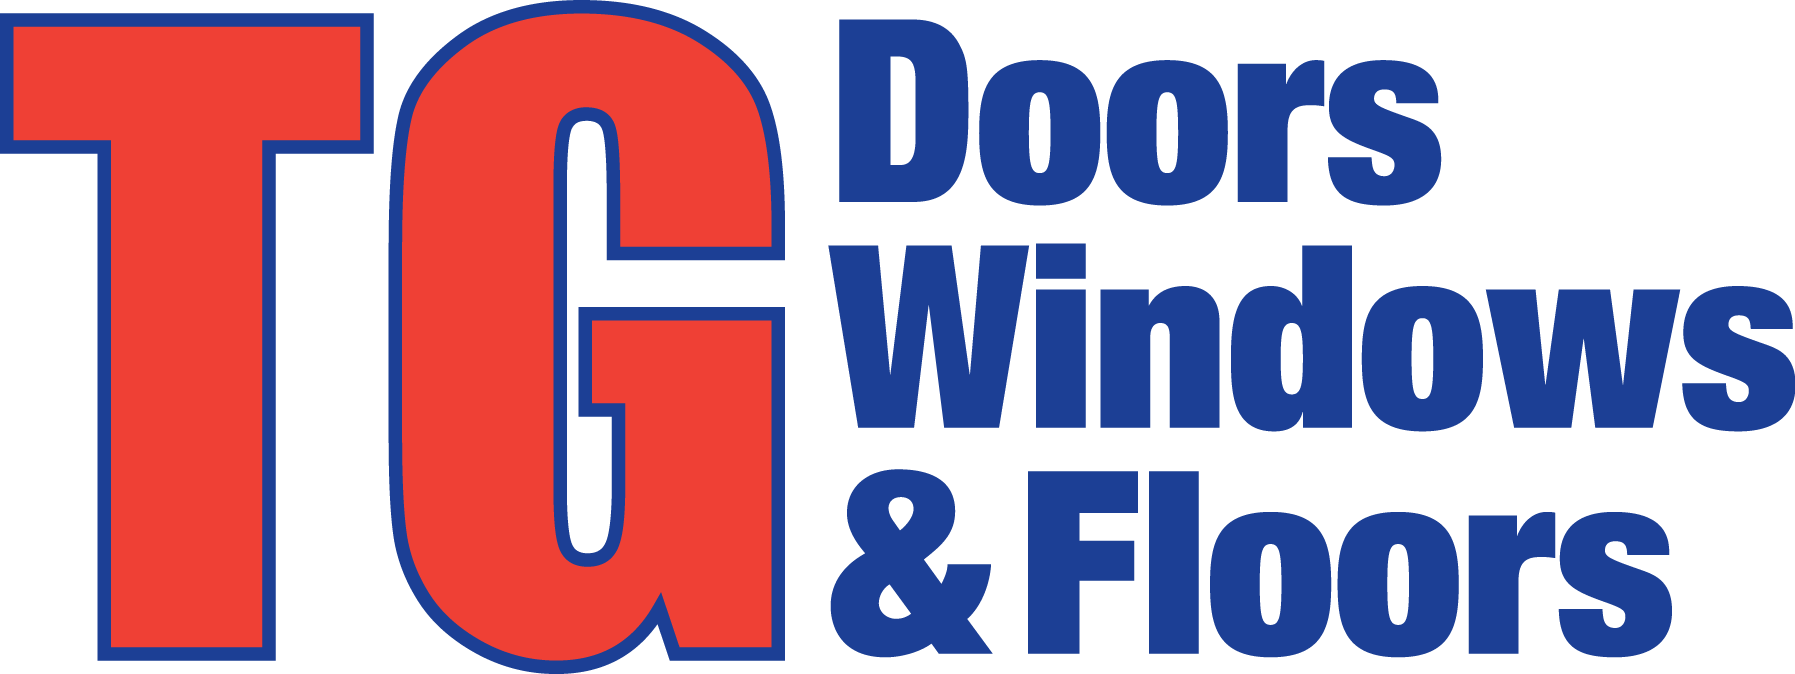 TG Doors, Windows & Floors Centre